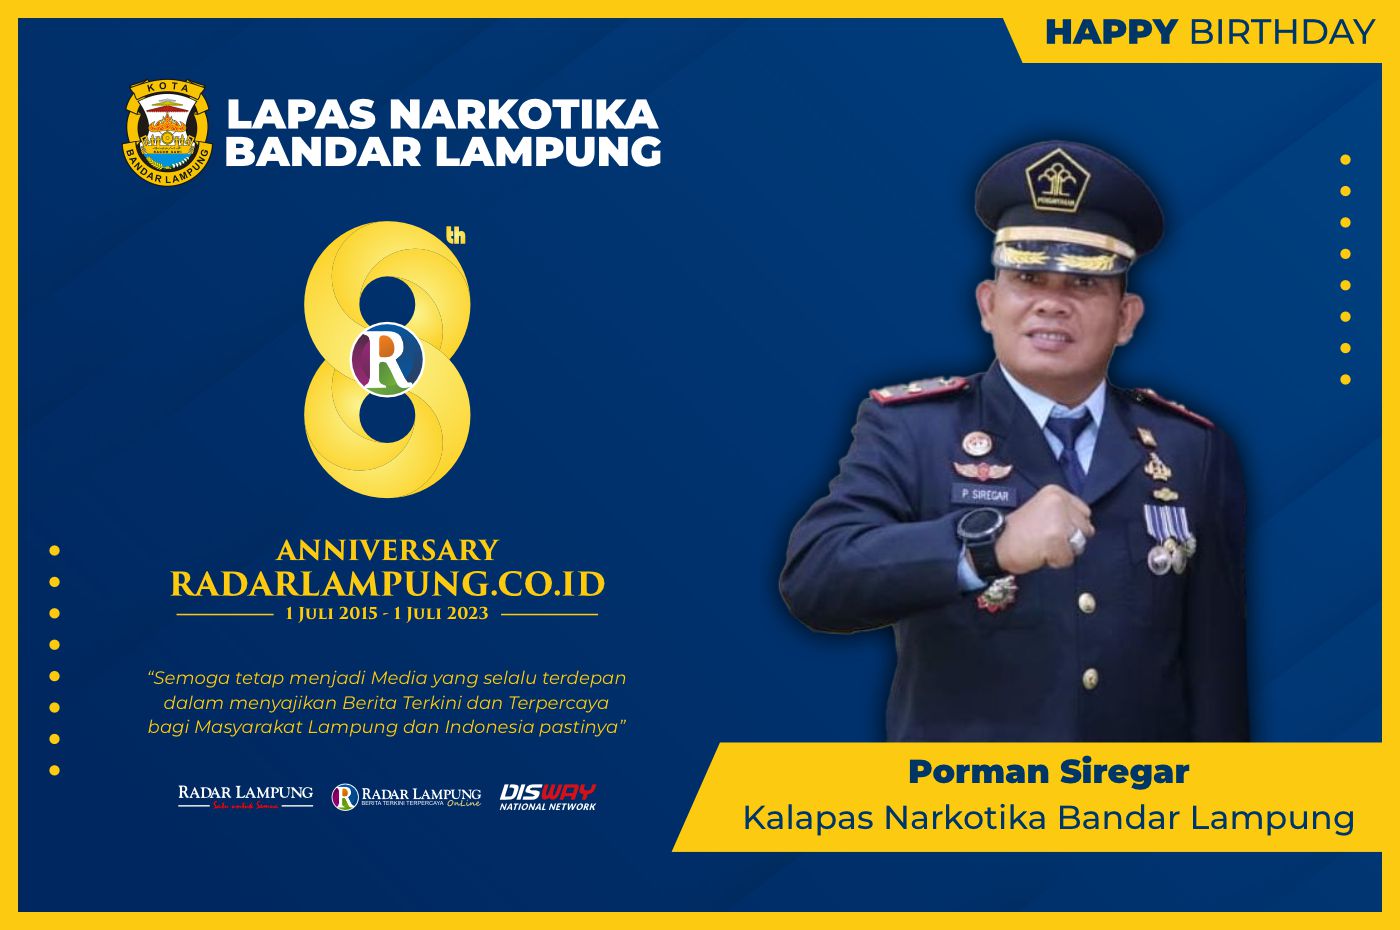 Porman Siregar: Selamat Ulang Tahun Radar Lampung Online ke-8